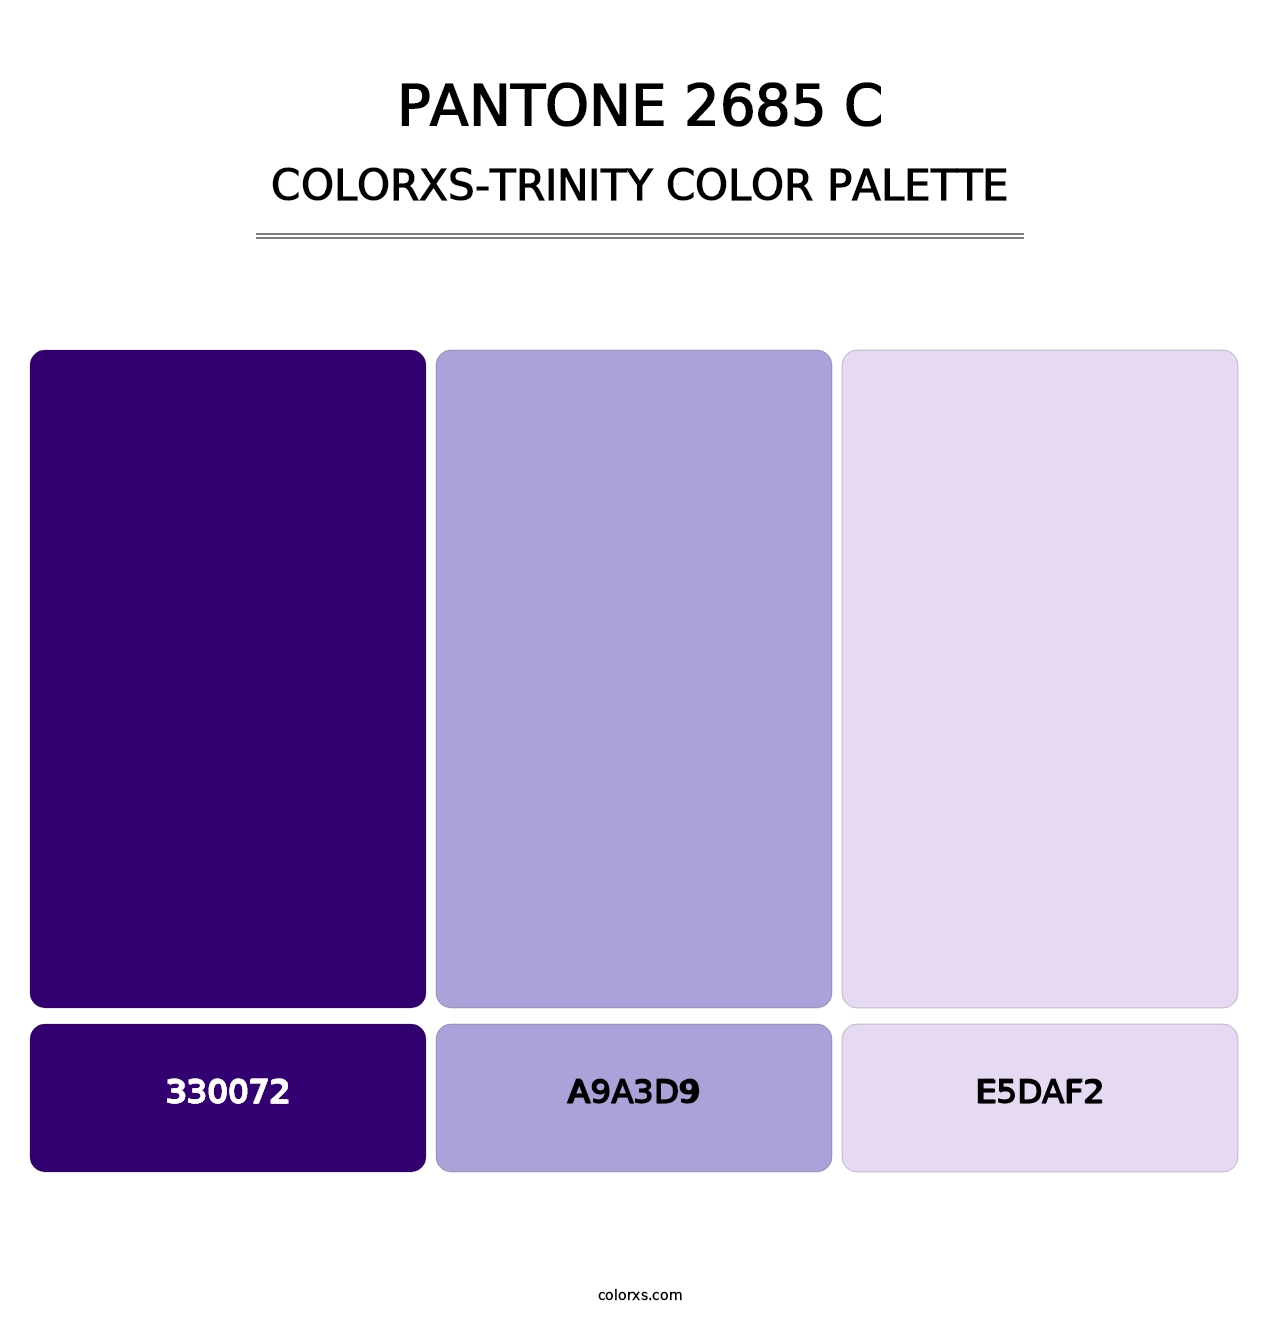 PANTONE 2685 C - Colorxs Trinity Palette